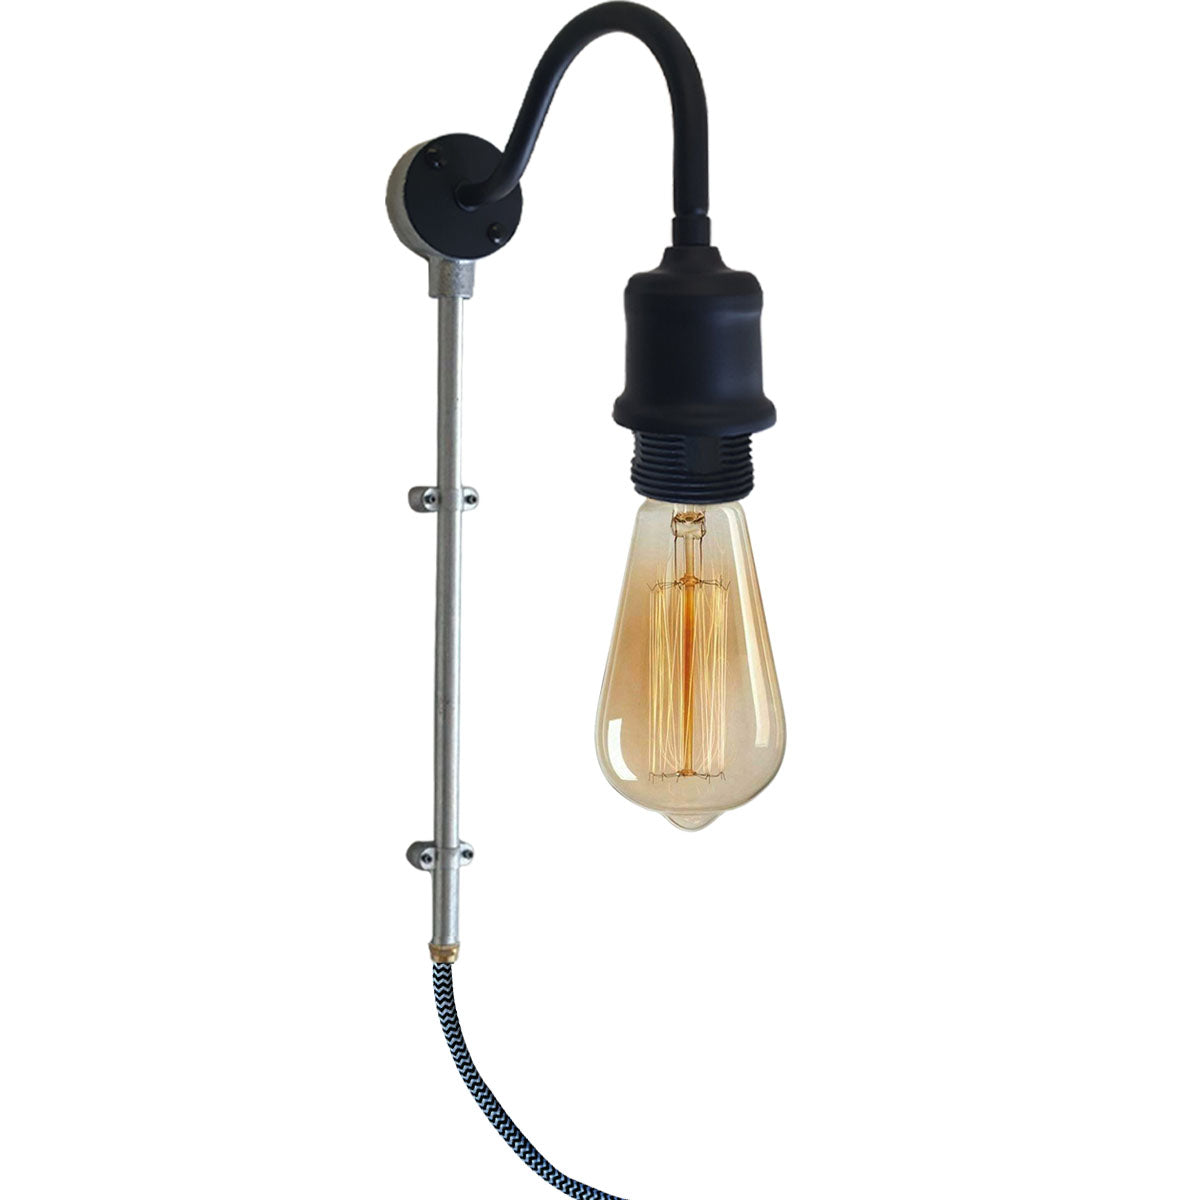 2m Plug with Dimmer Switch Fabric Flex Cable Plug In Pendant Pipe Light Set Black~1606 - LEDSone UK Ltd